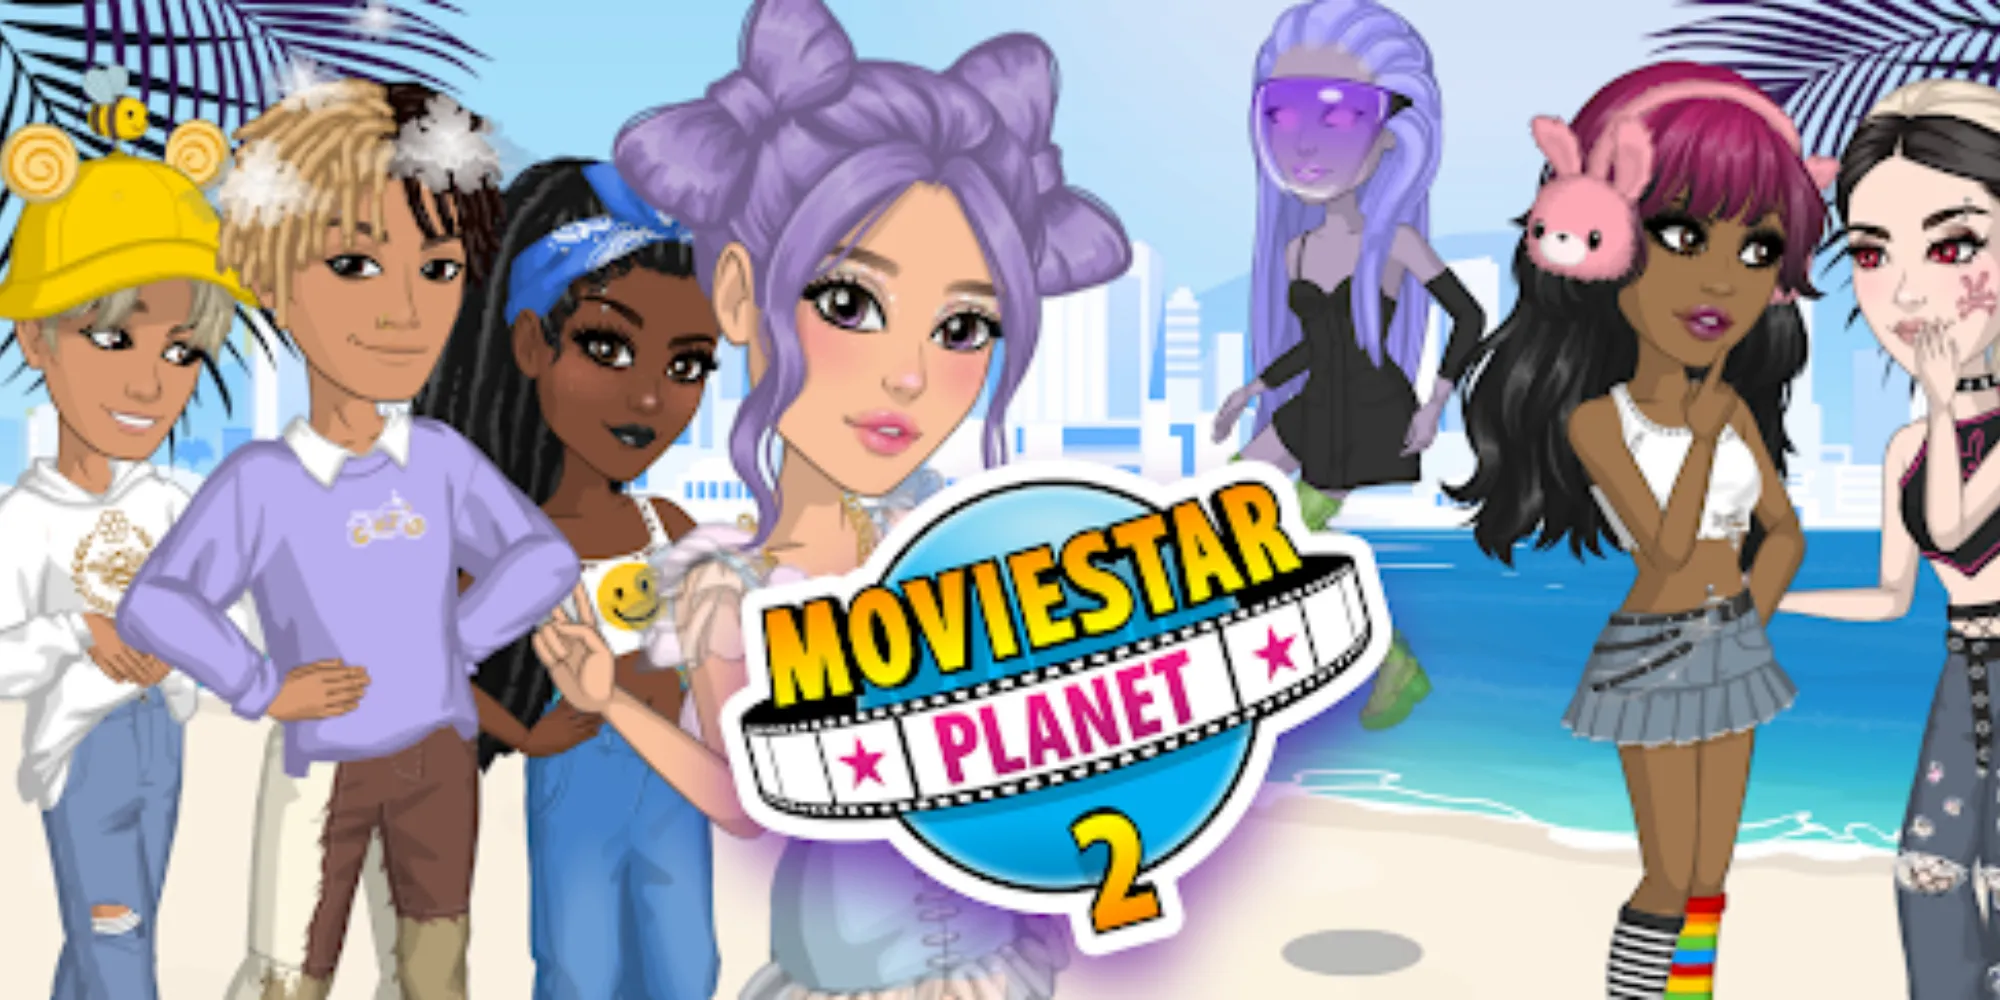 MovieStarPlanet 2